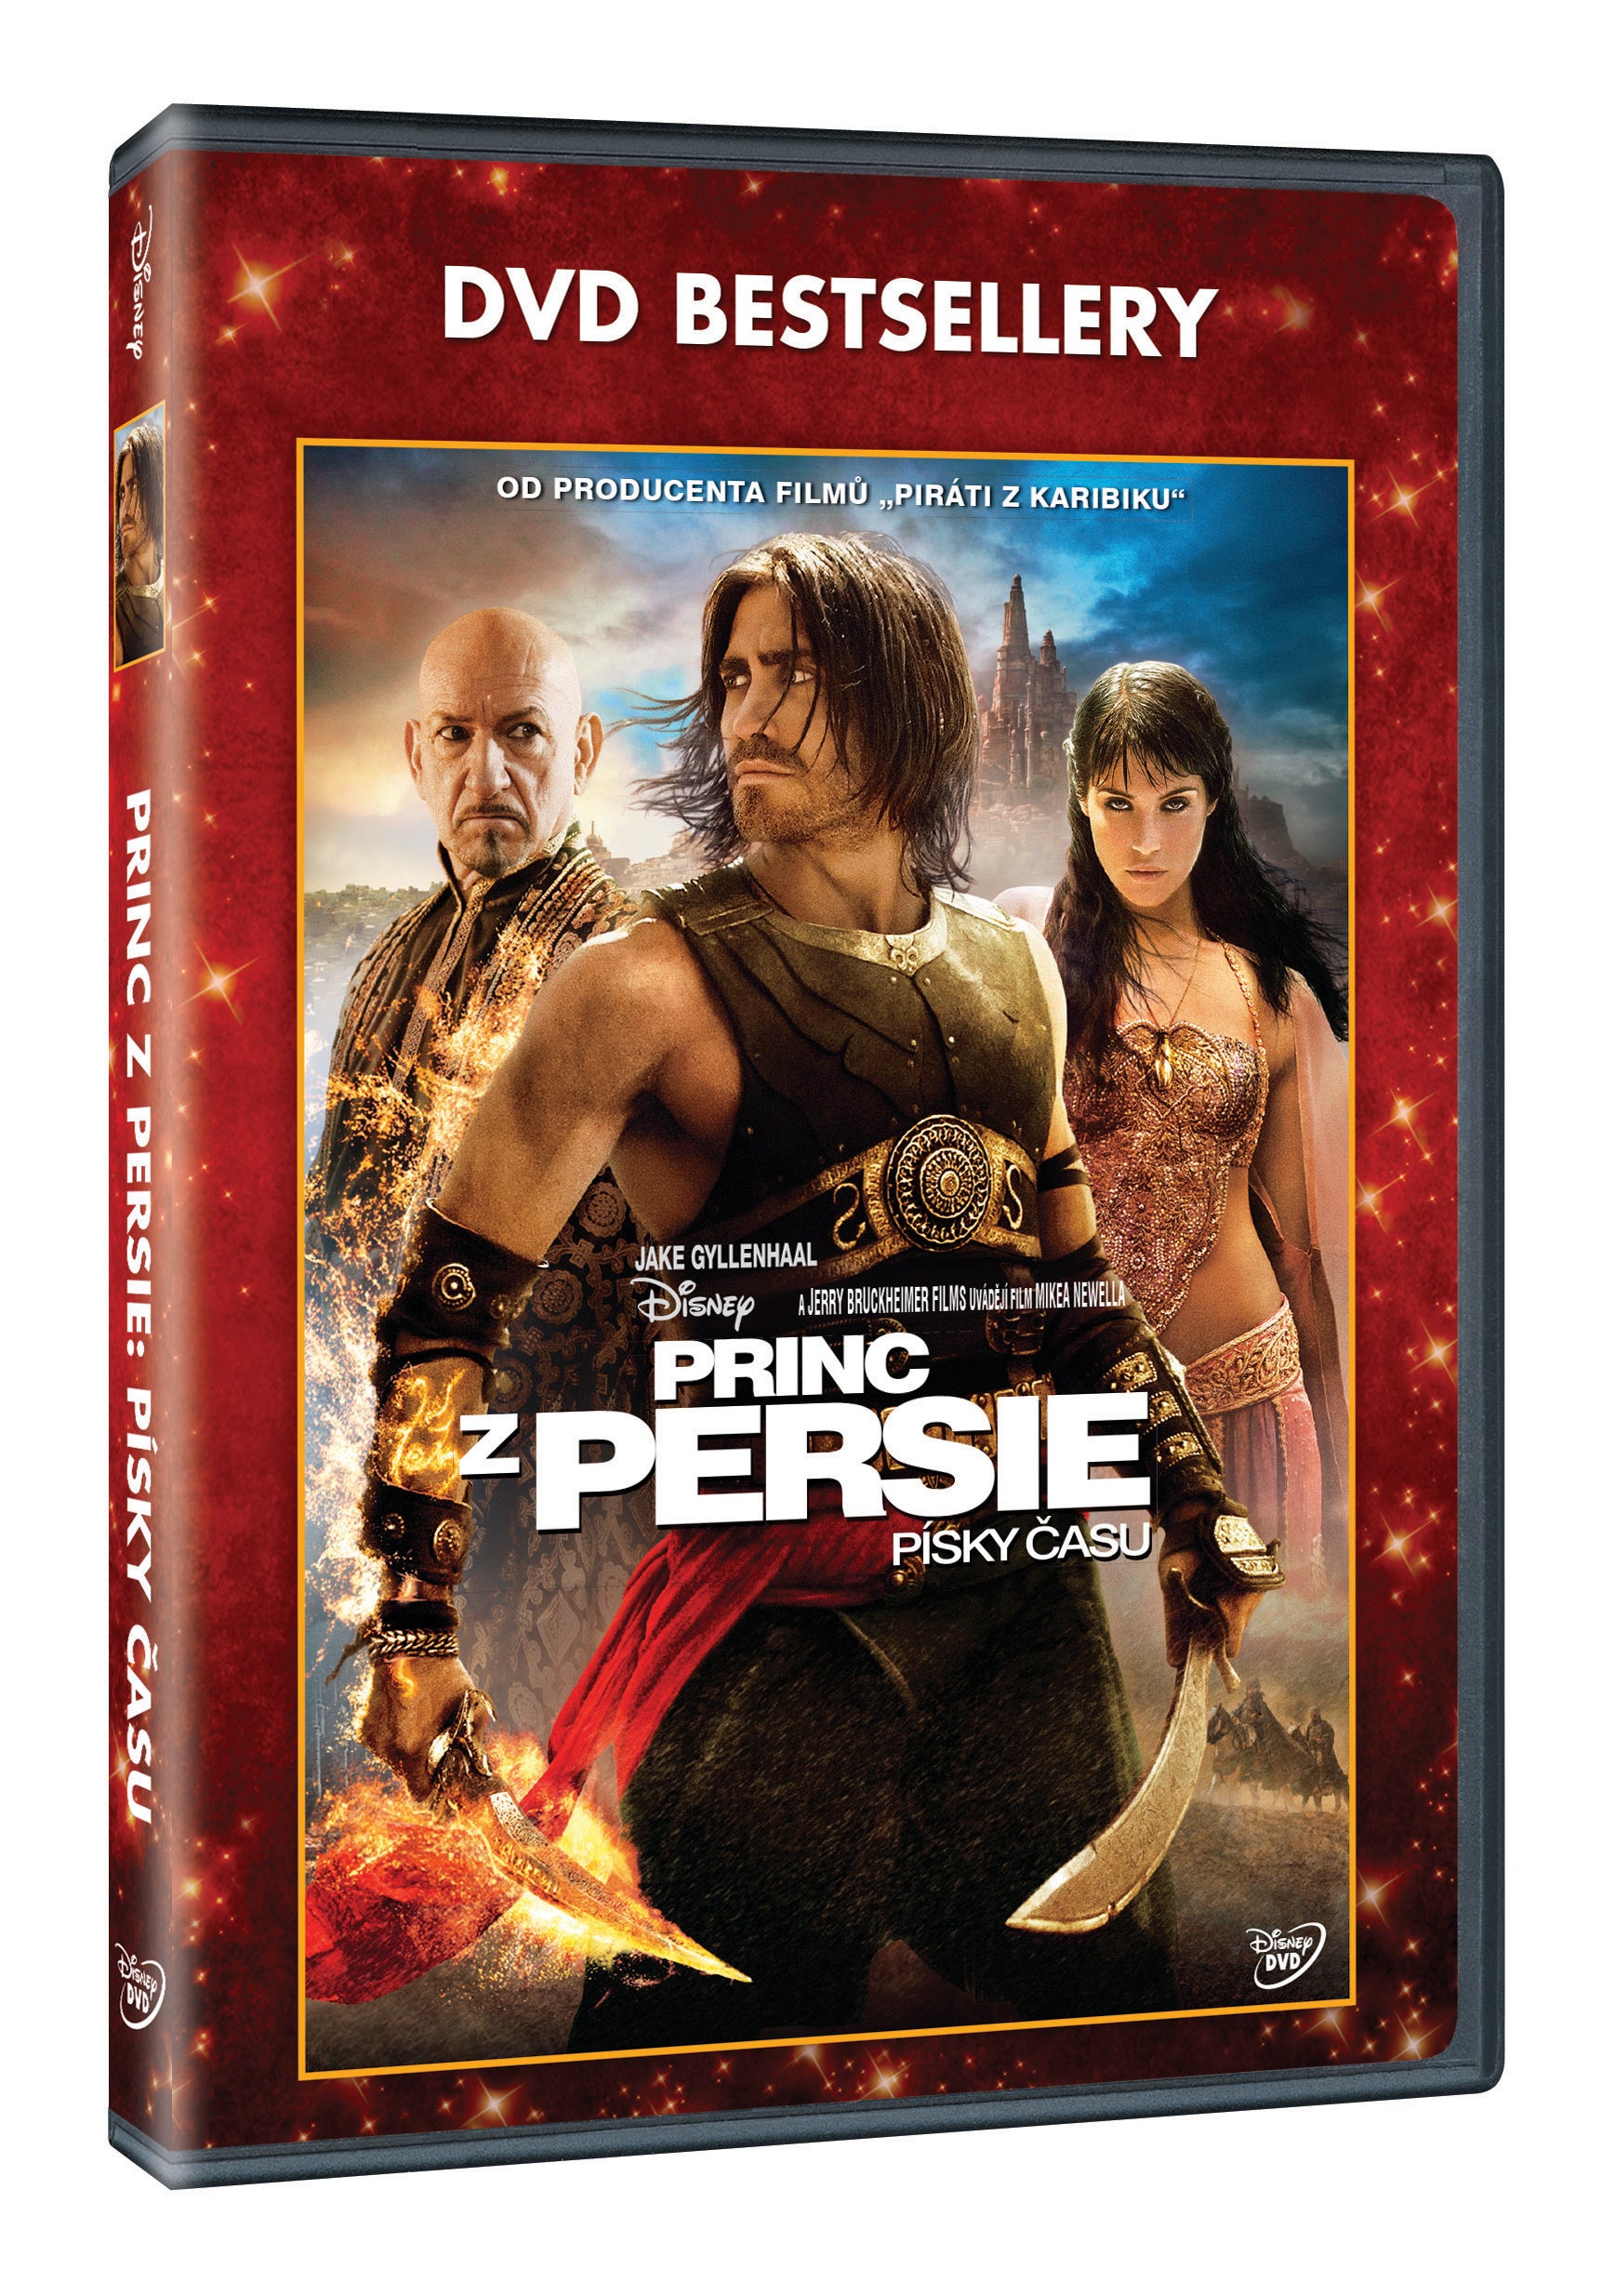 Princ z Persie: Pisky casu - DVD-Bestseller (Prince Of Persia: The Sands Of Time)